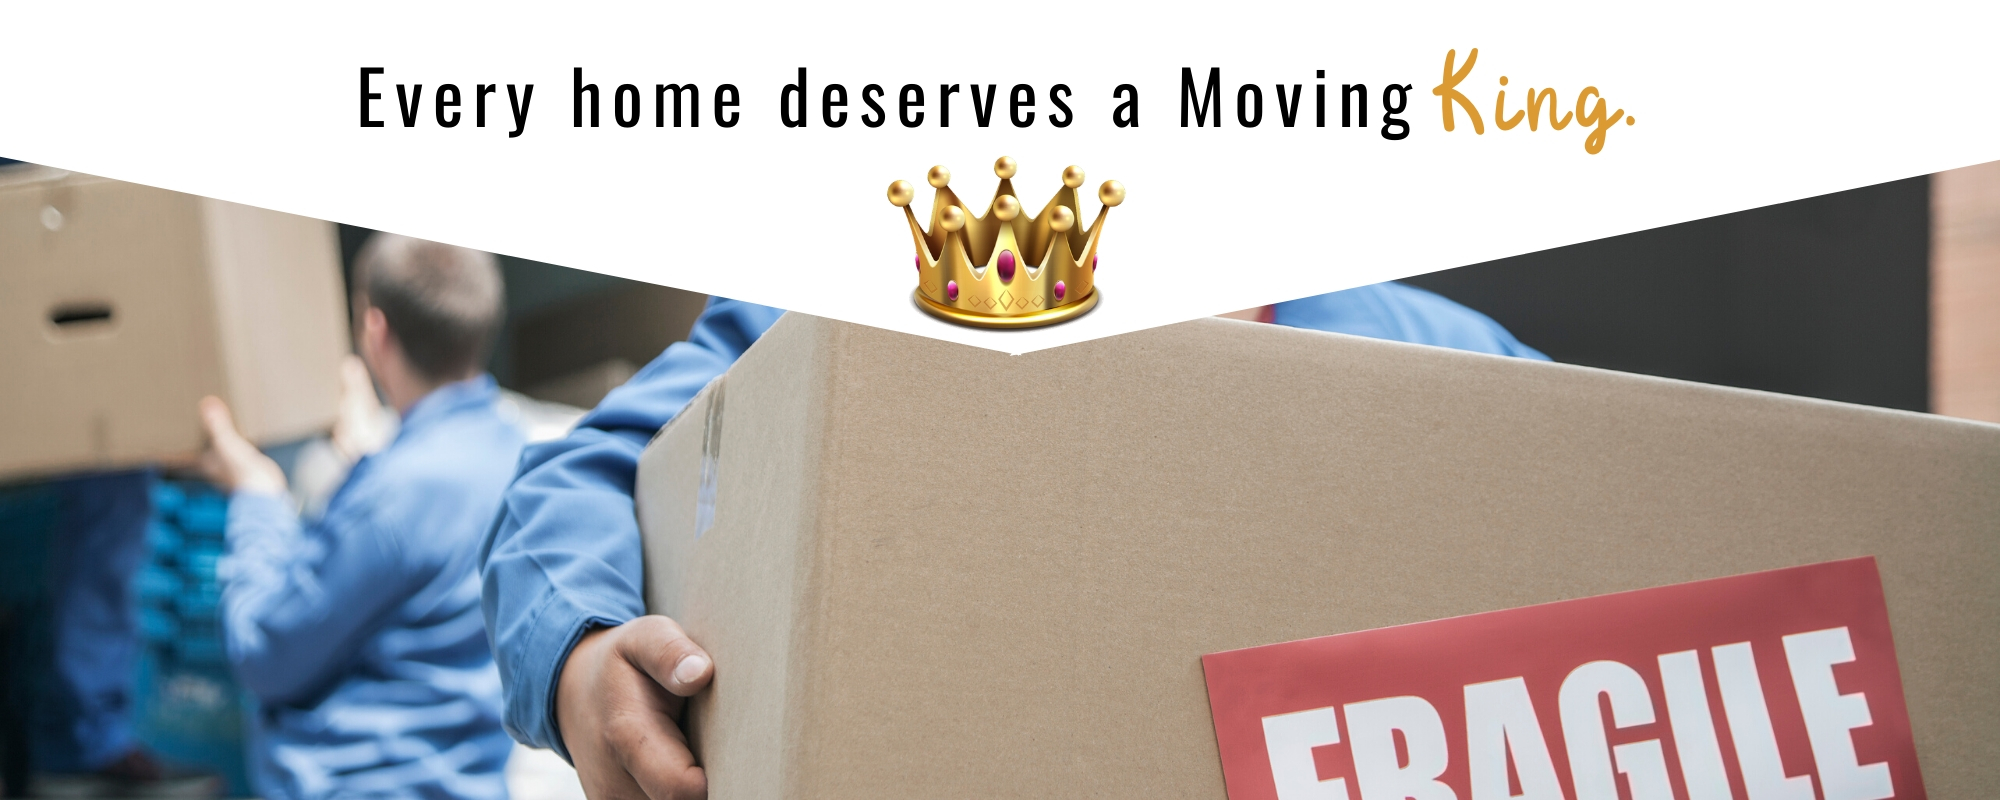 Moving Kings treats you like royalty.